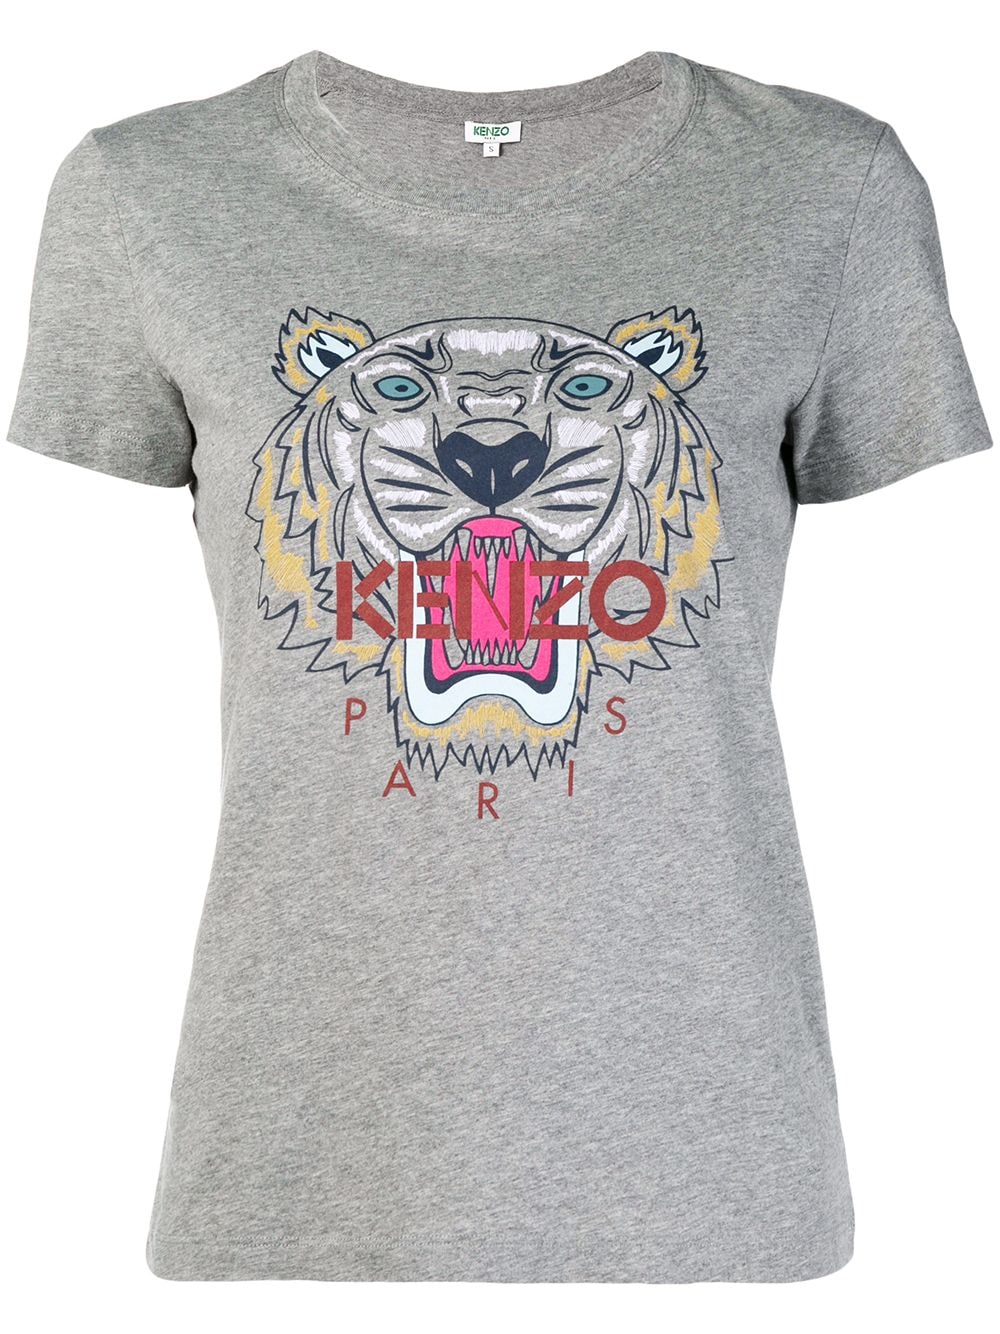 фото Kenzo футболка с тигром